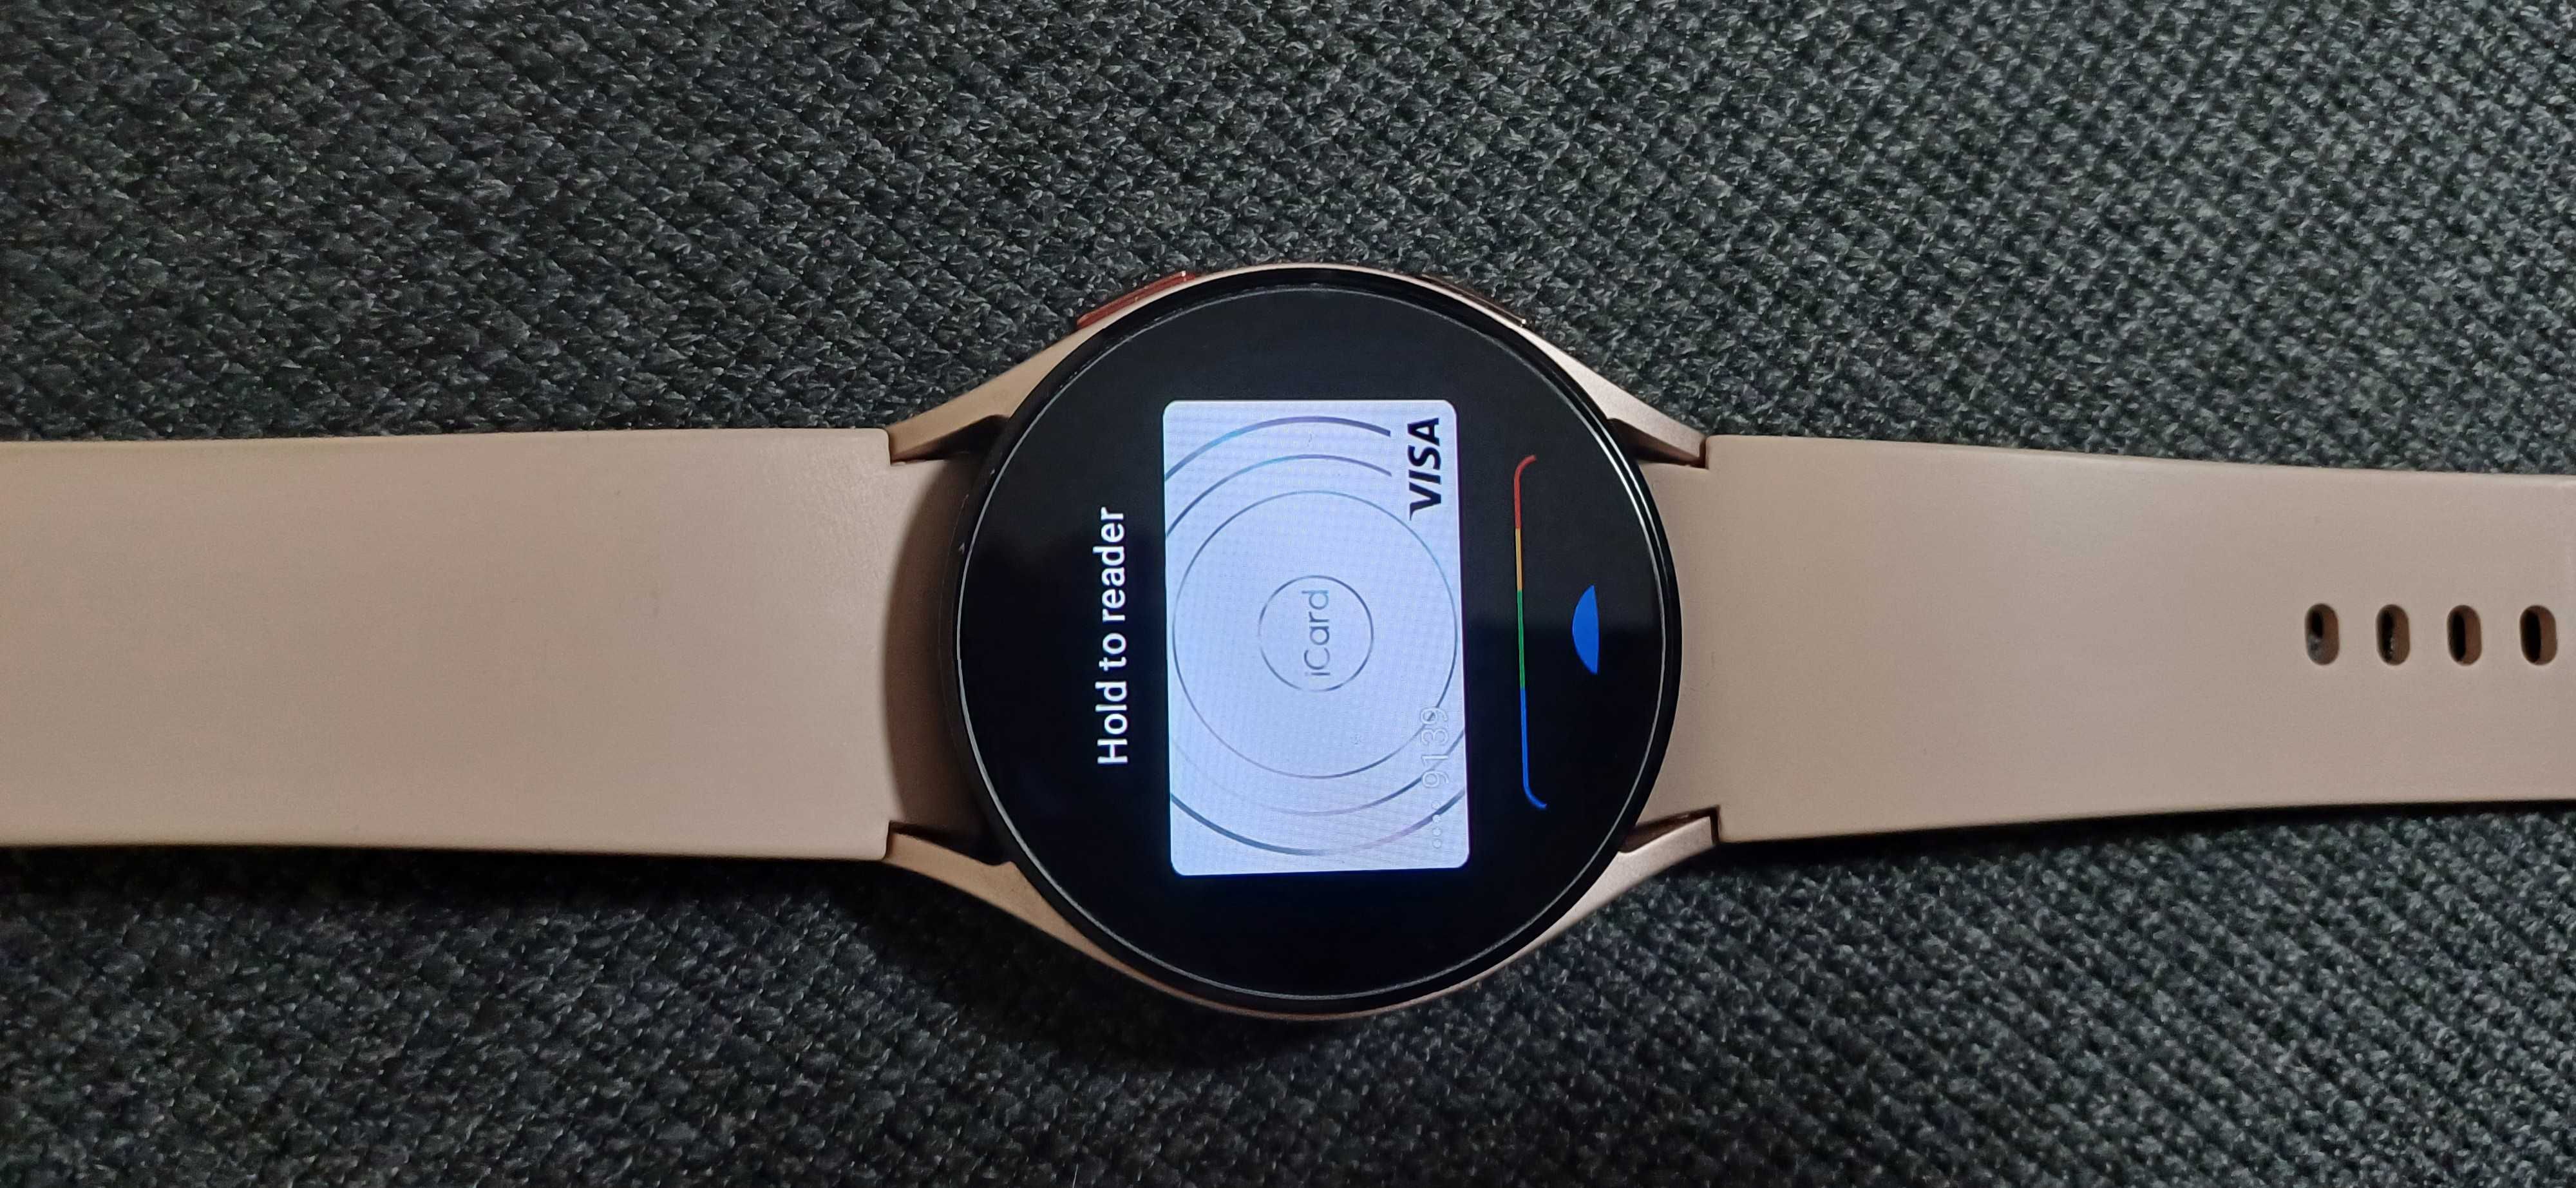 Samsung Galaxy Watch4 40mm PinkGold LTE| Bluetooth | Wi-Fi | GPS | NFC